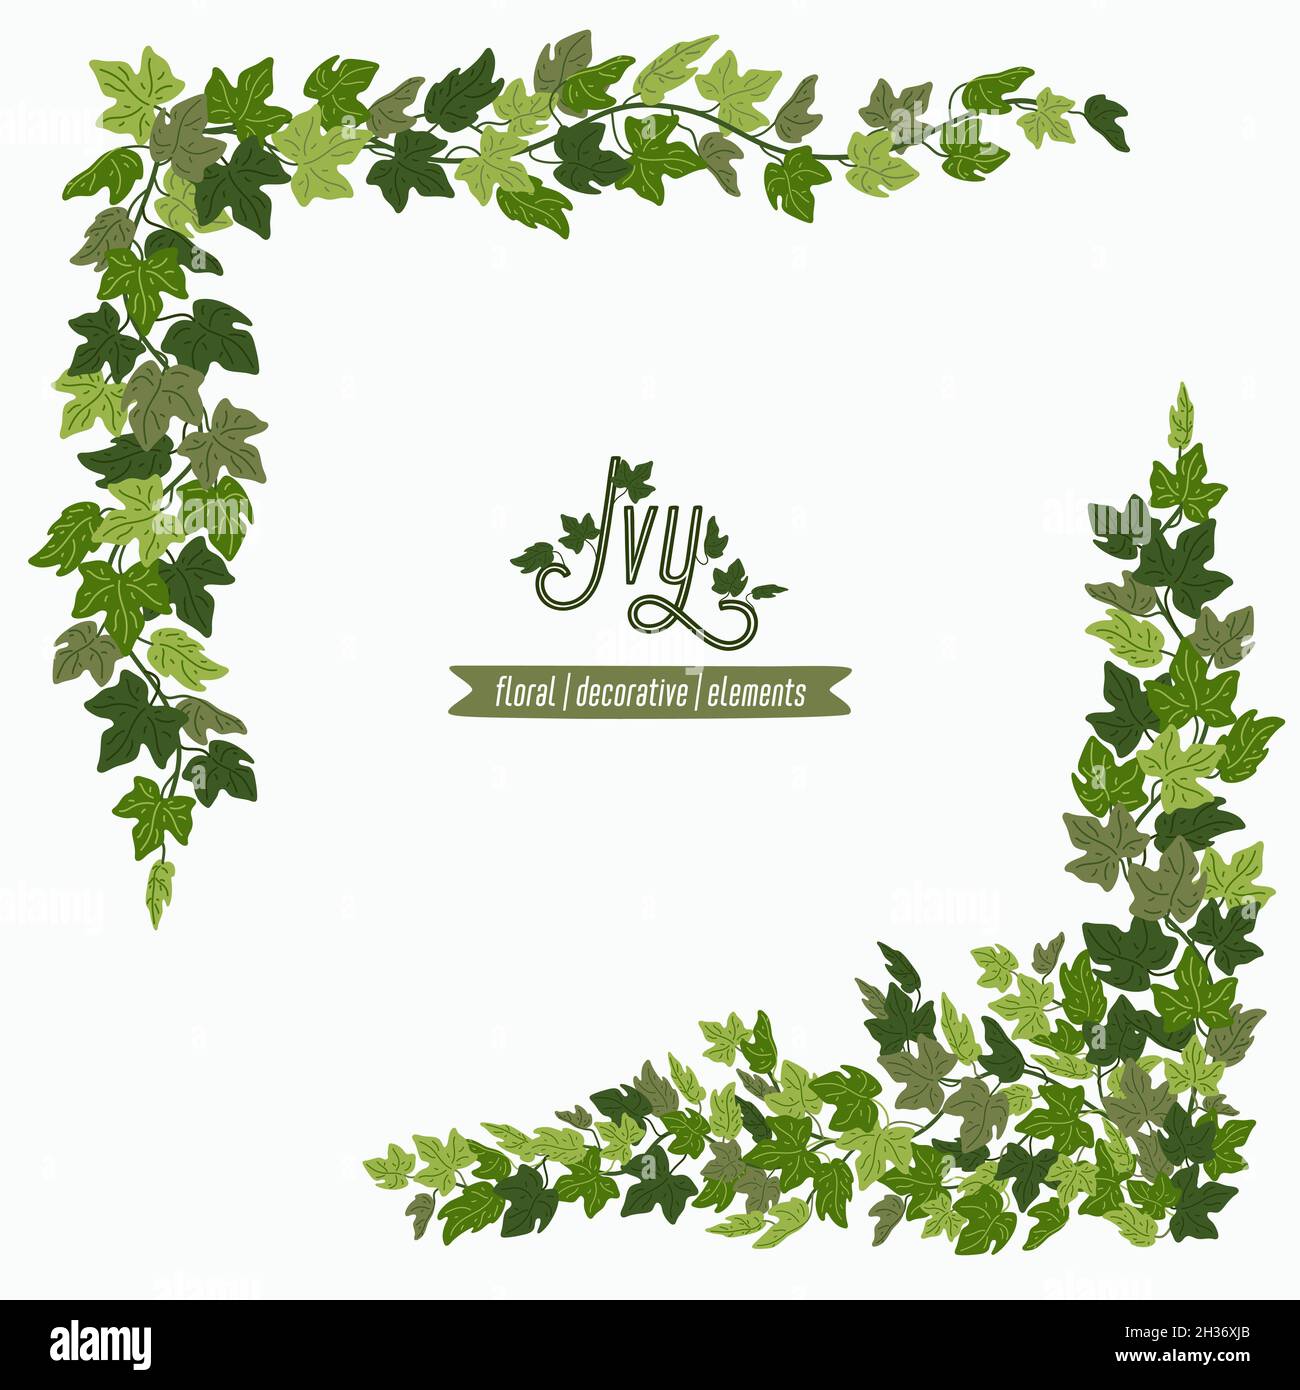 green vine design